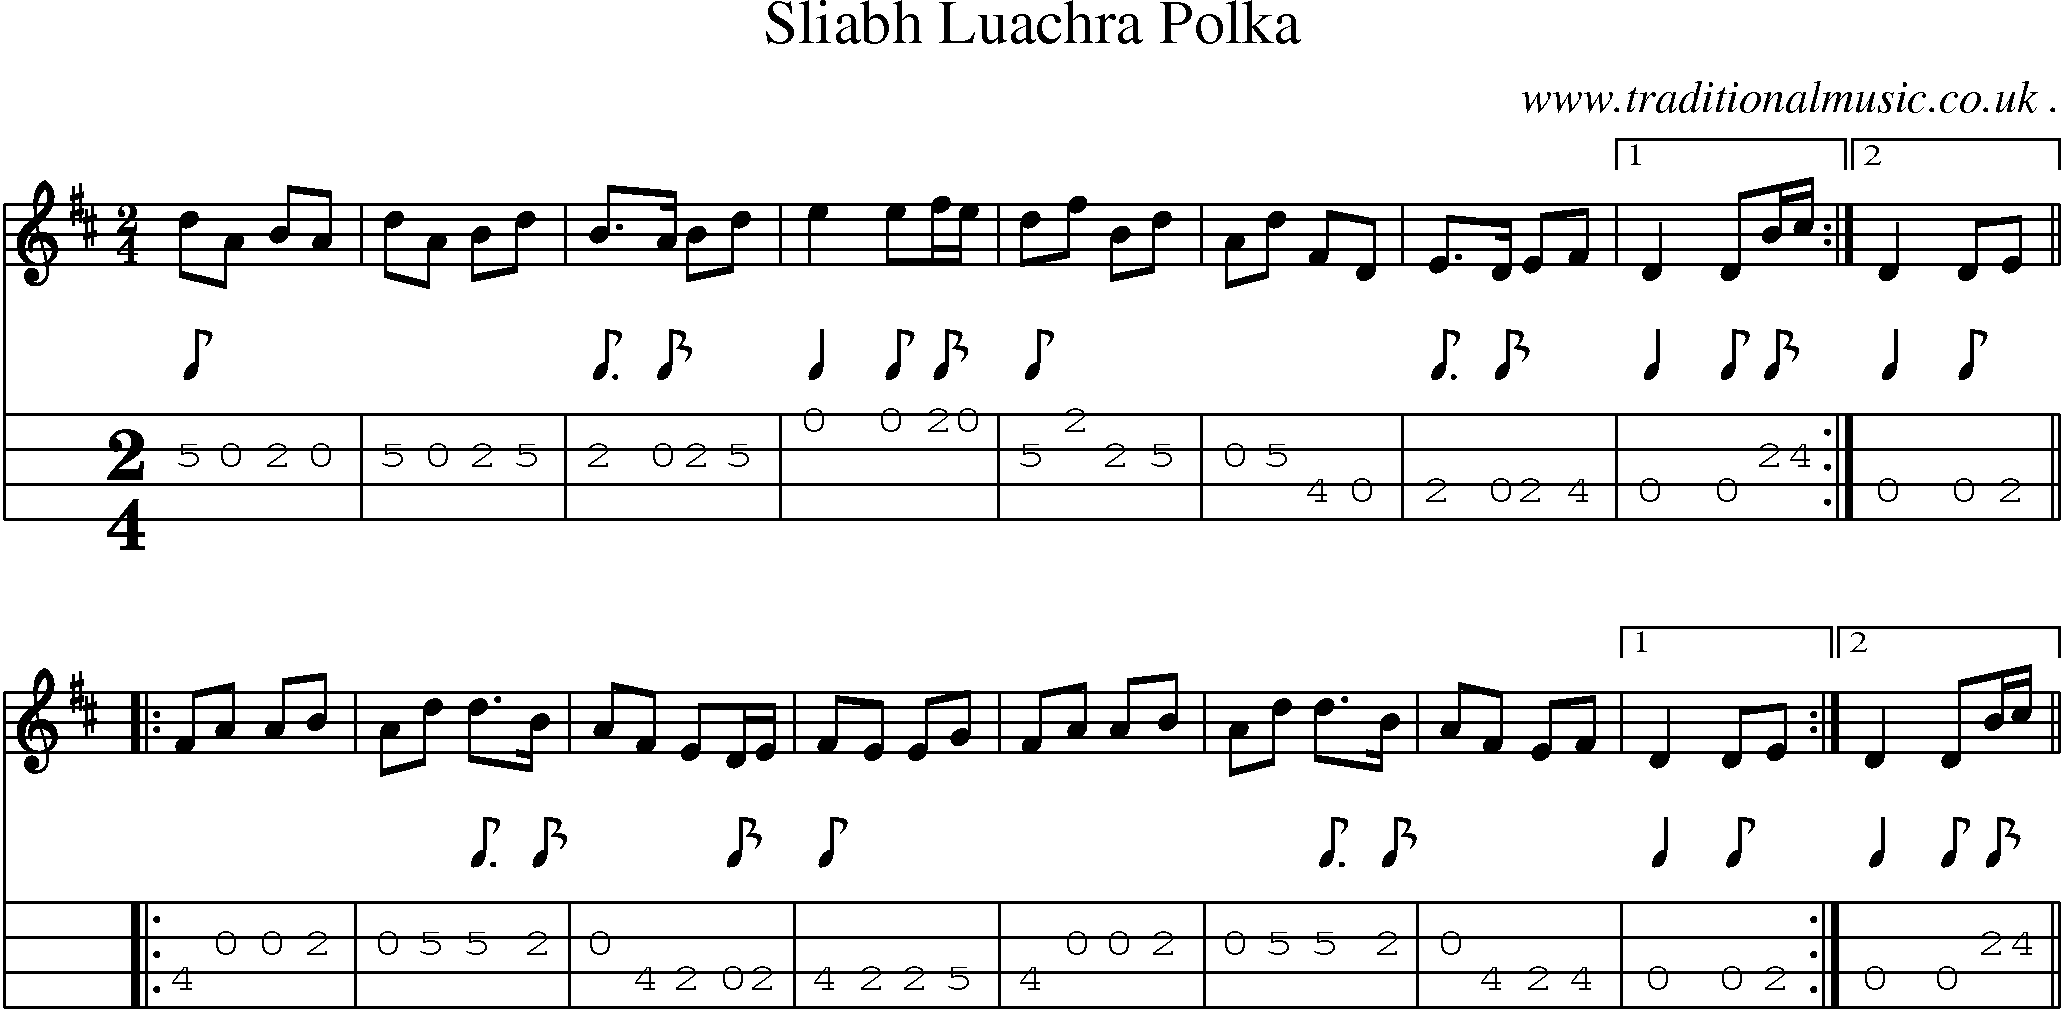 Sheet-Music and Mandolin Tabs for Sliabh Luachra Polka